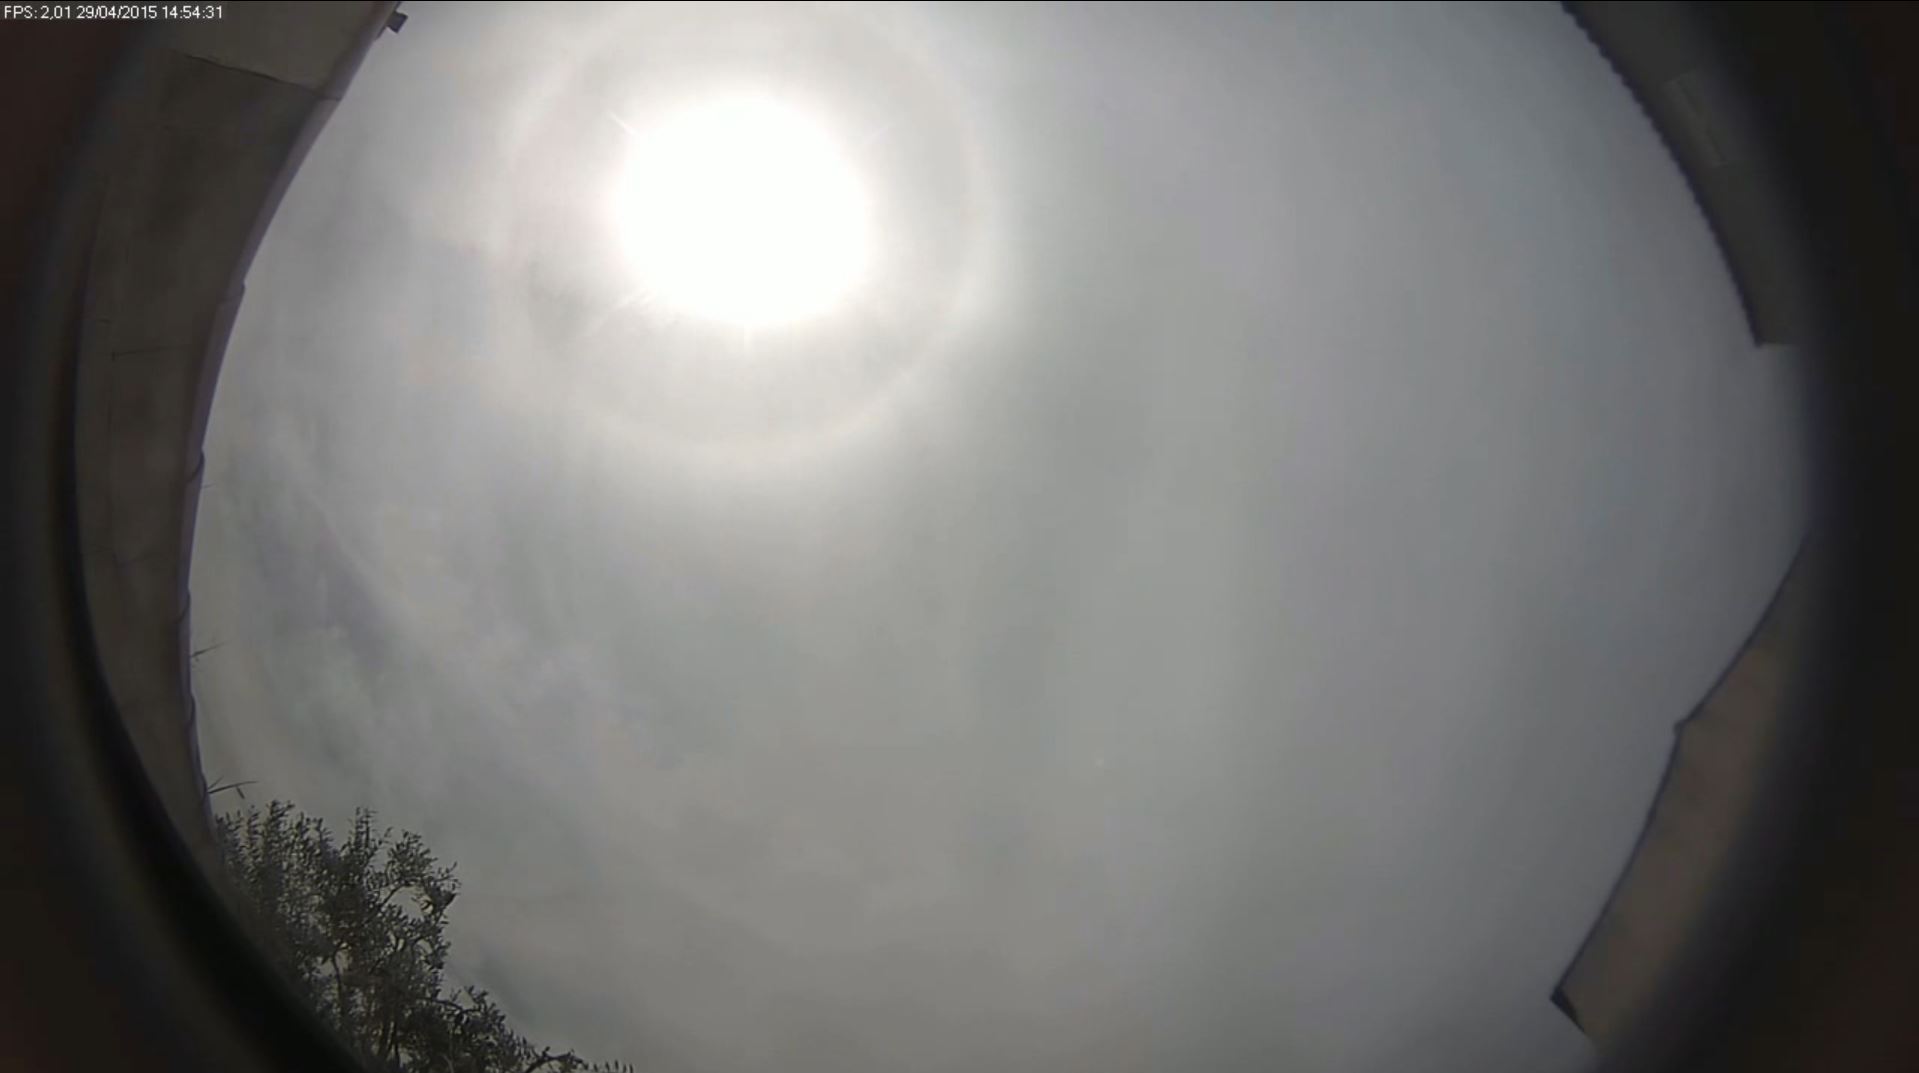 halo-solaire-29-04-2015.JPG